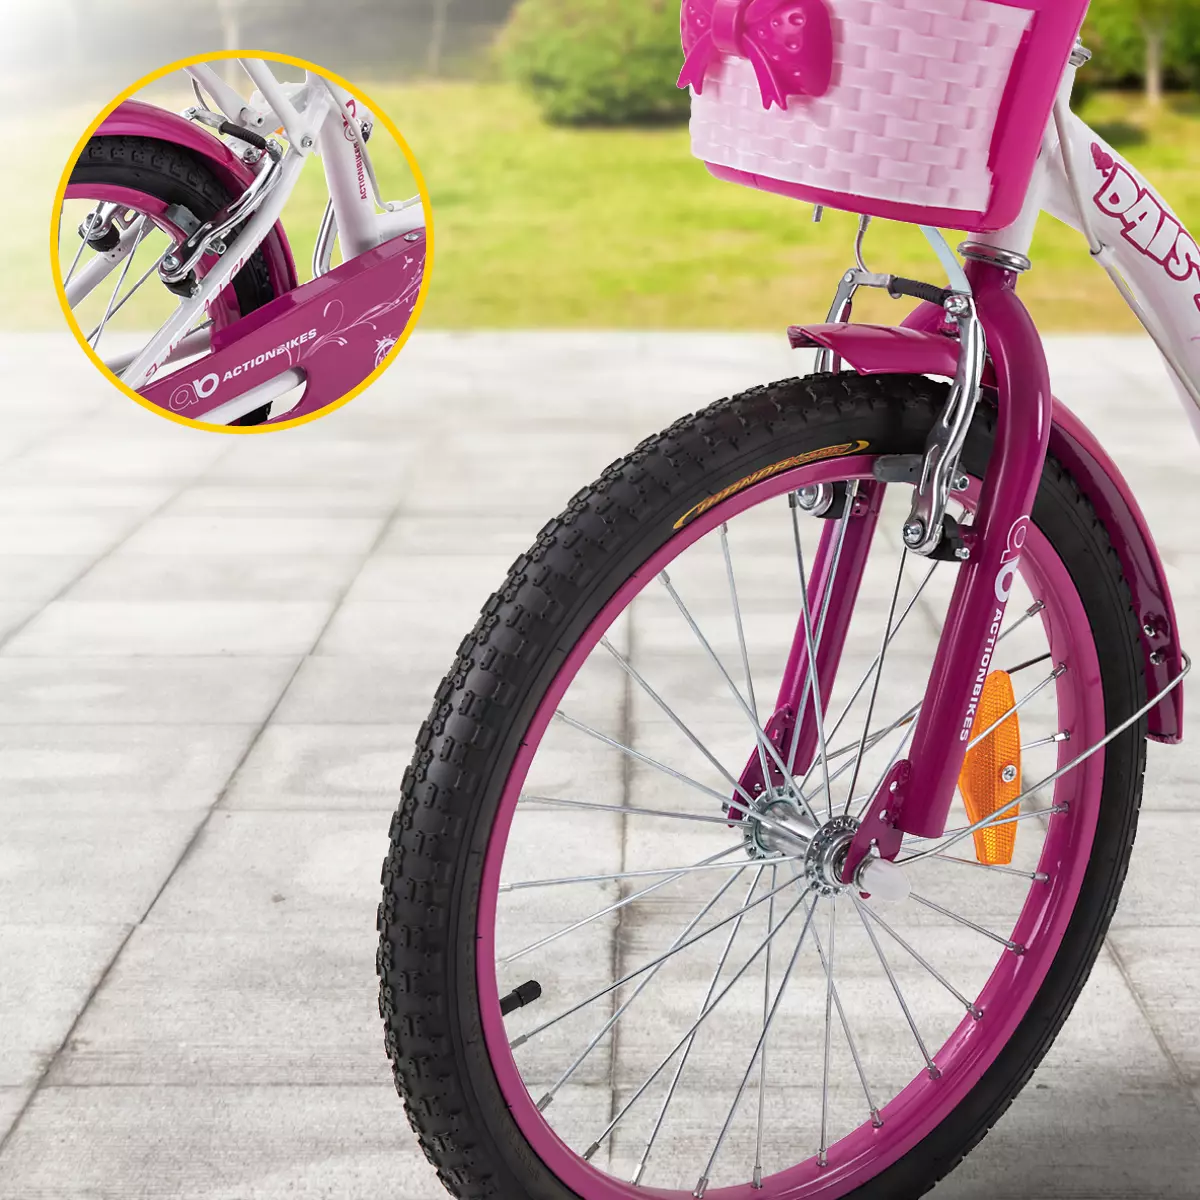 20-Zoll-Kinderfahrrad Daisy: Actionbikes Kinderrad